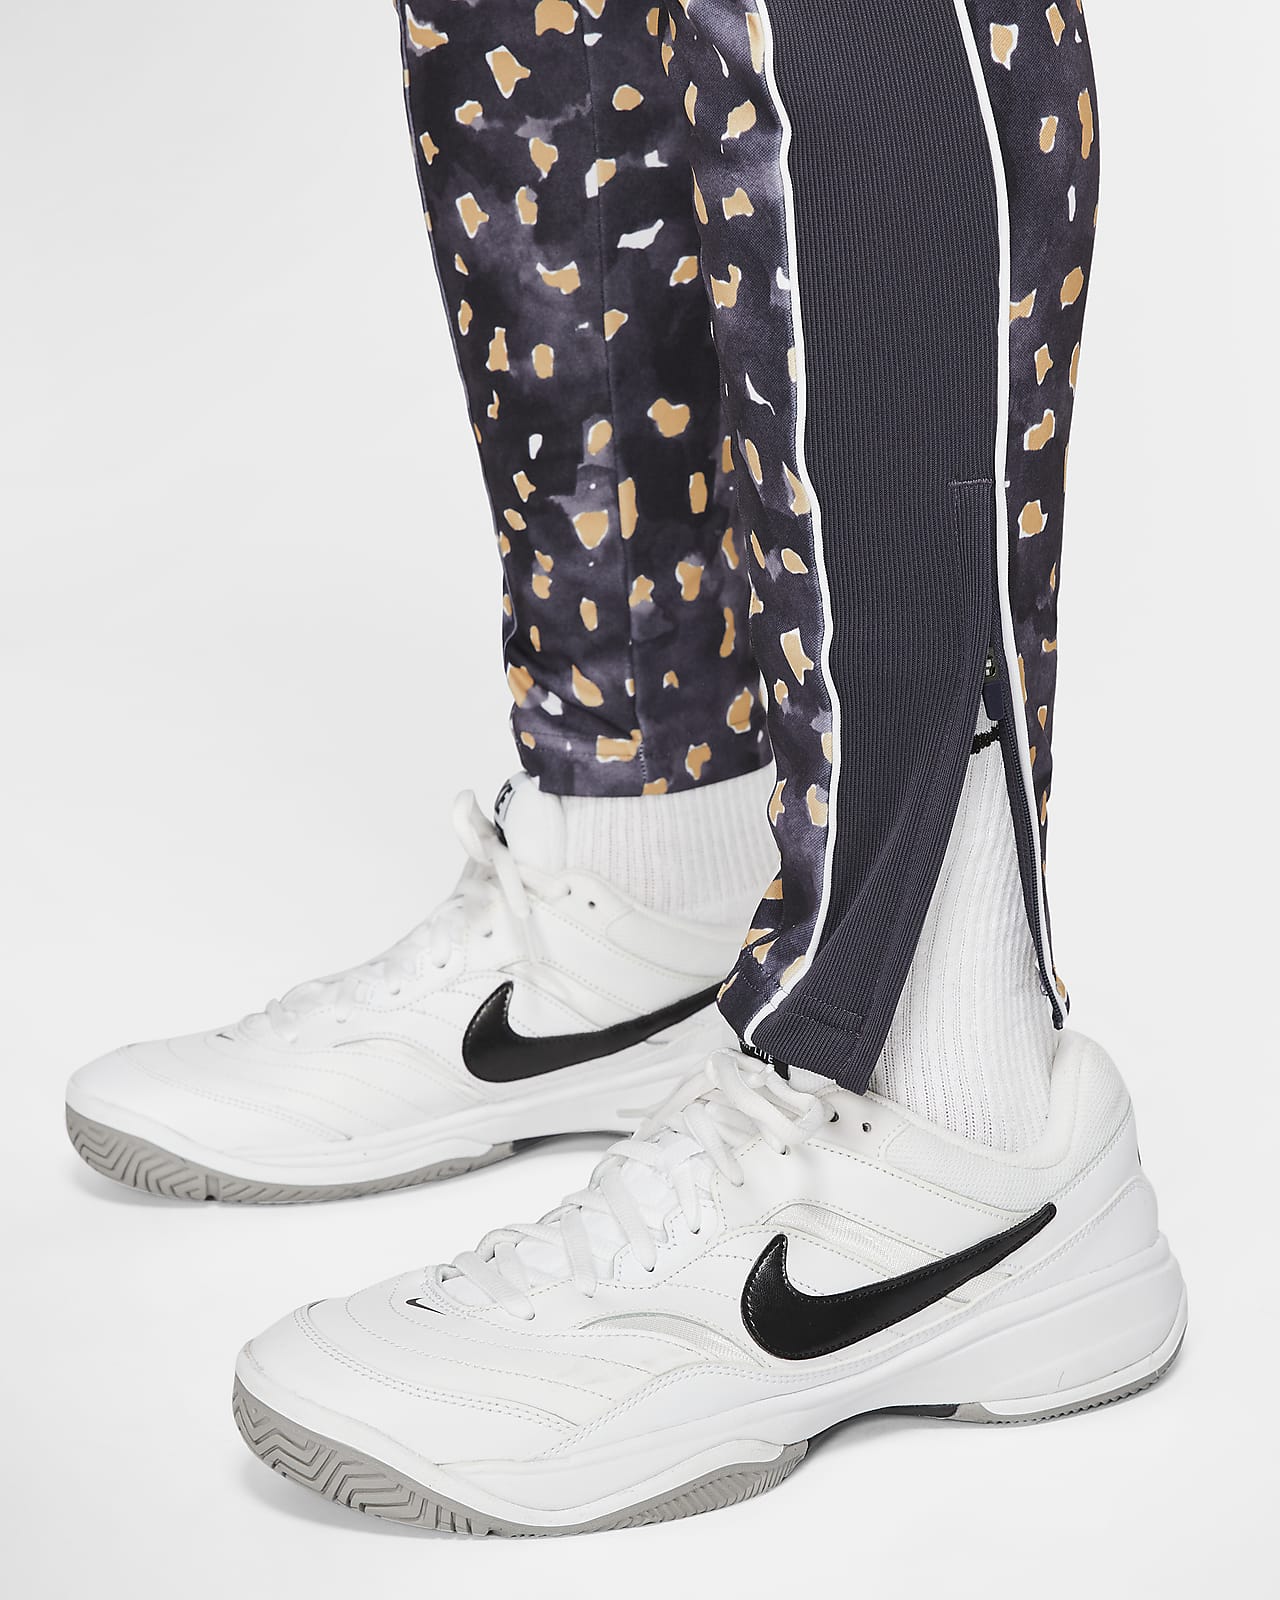 Nike Dry Warmup Pant  Tennis Uniforms & Equipment for School Teams